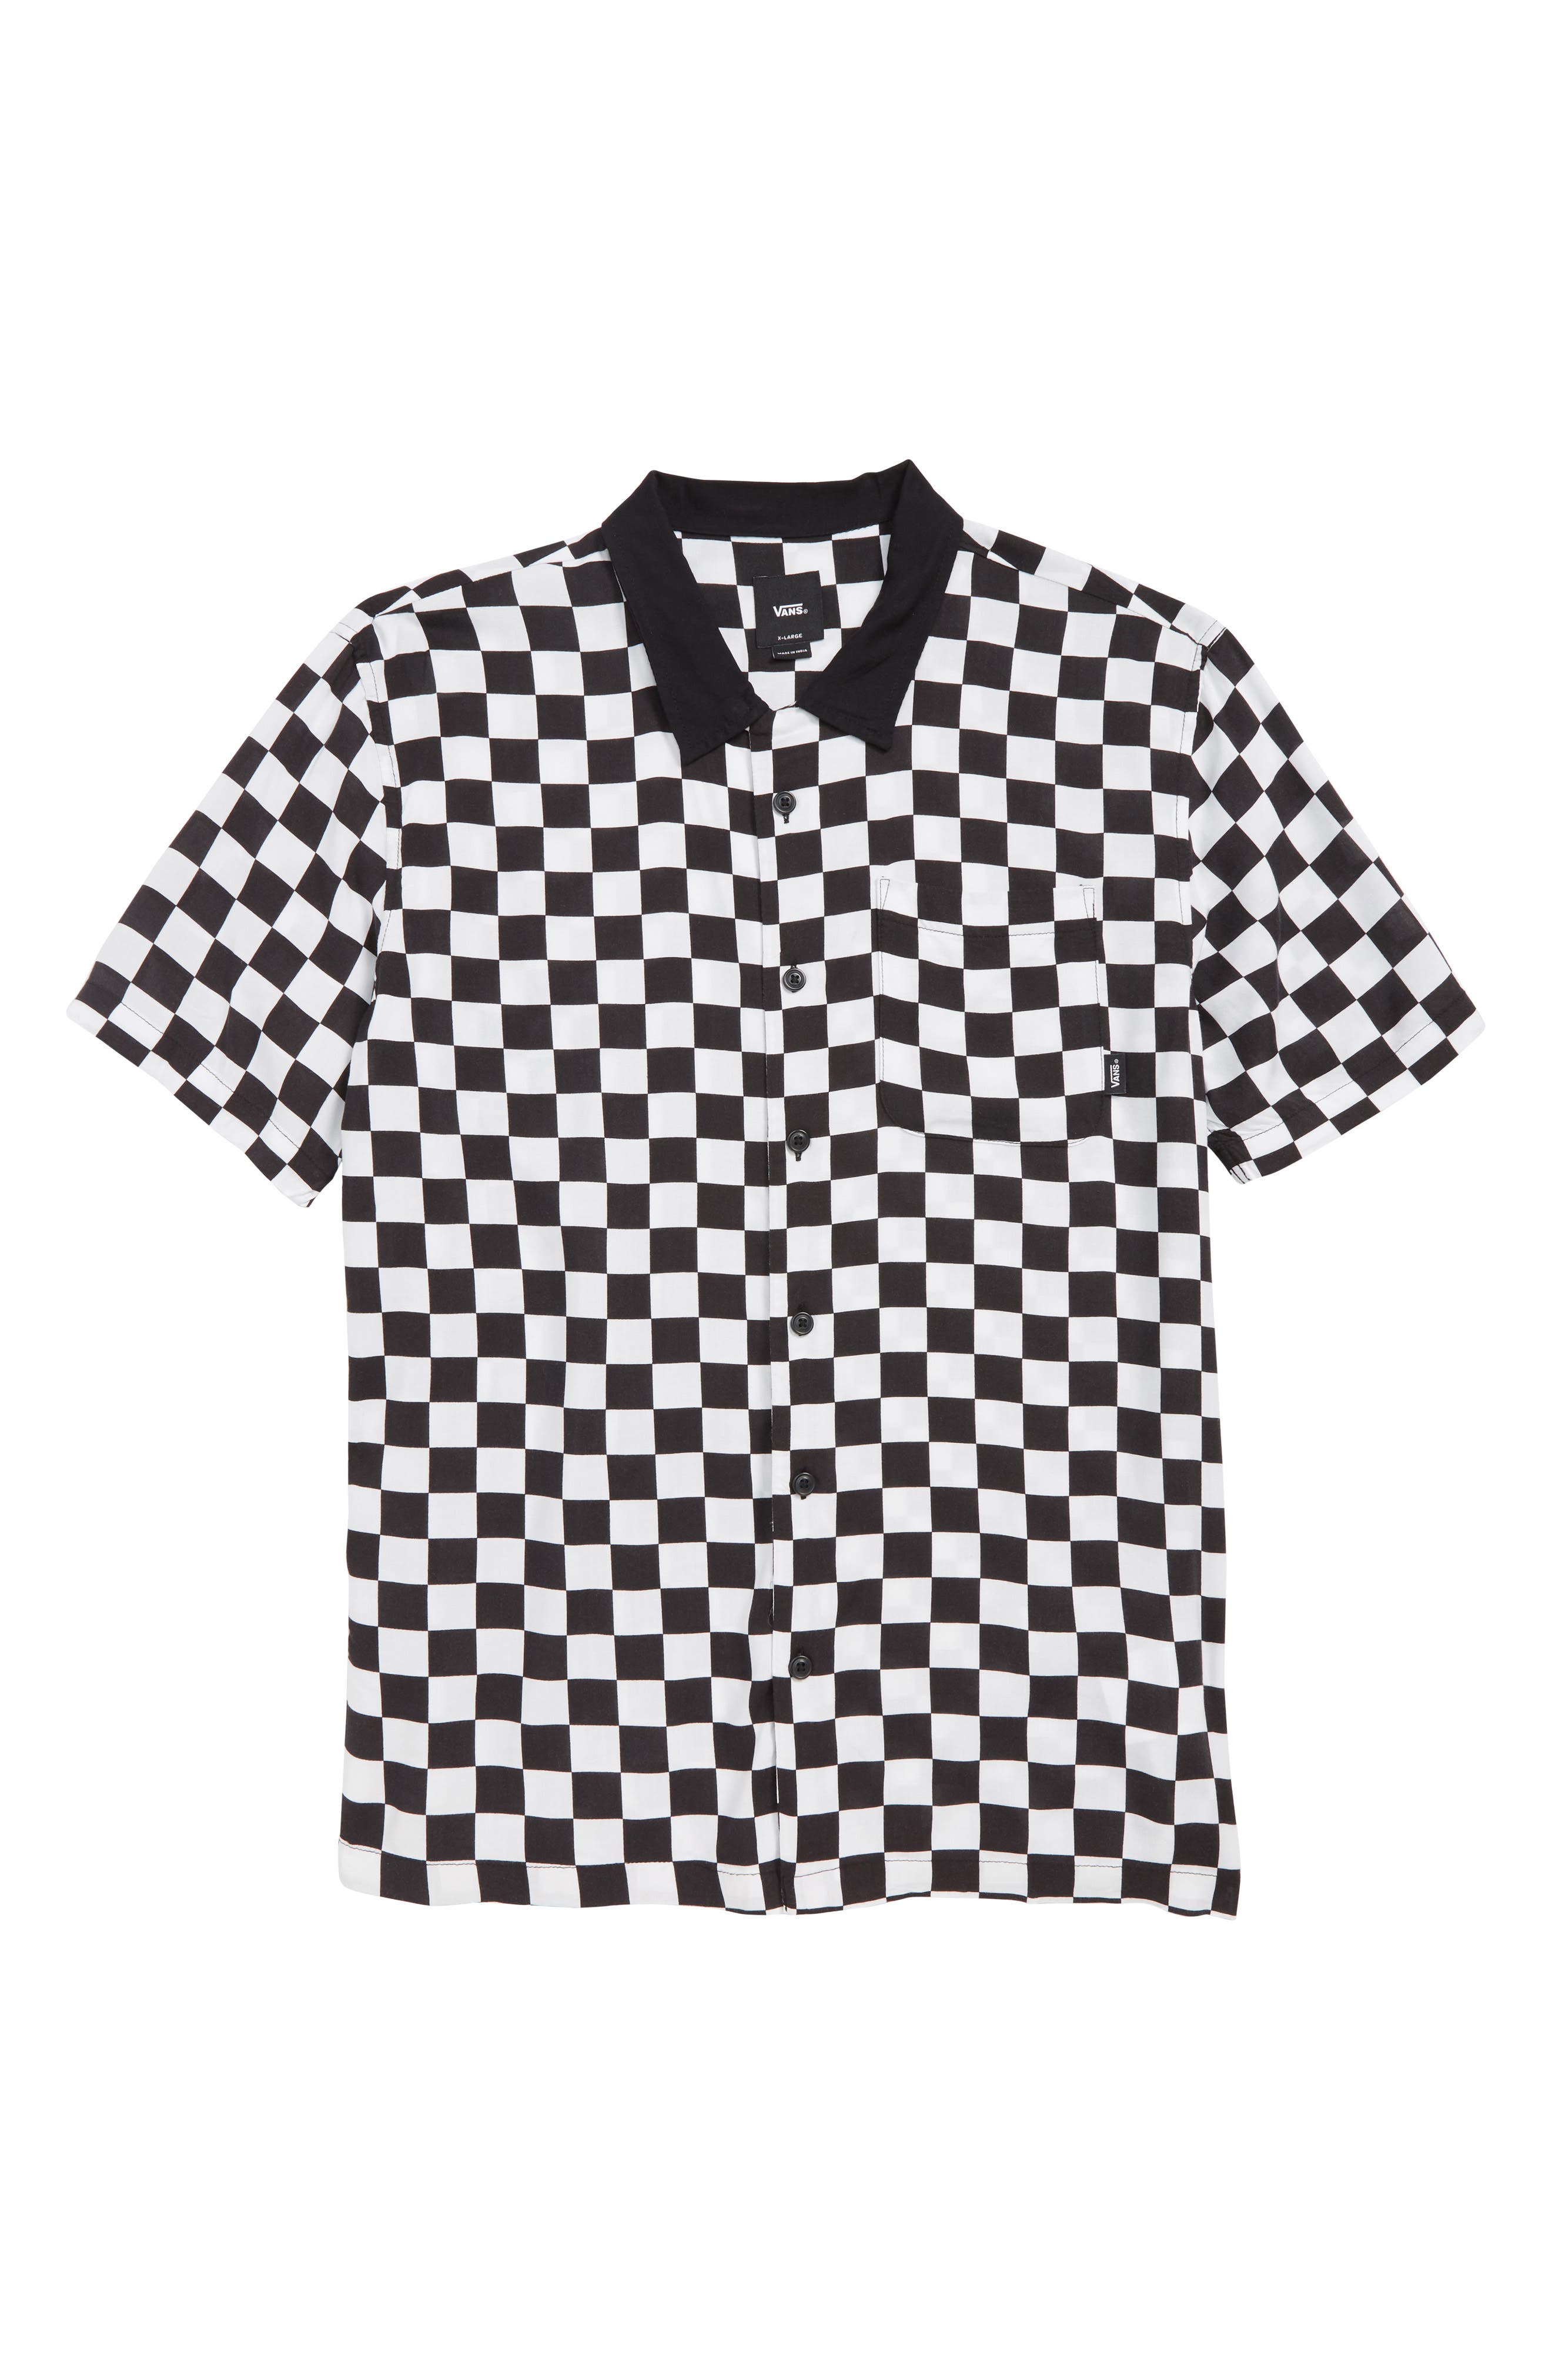 vans checkerboard shirt